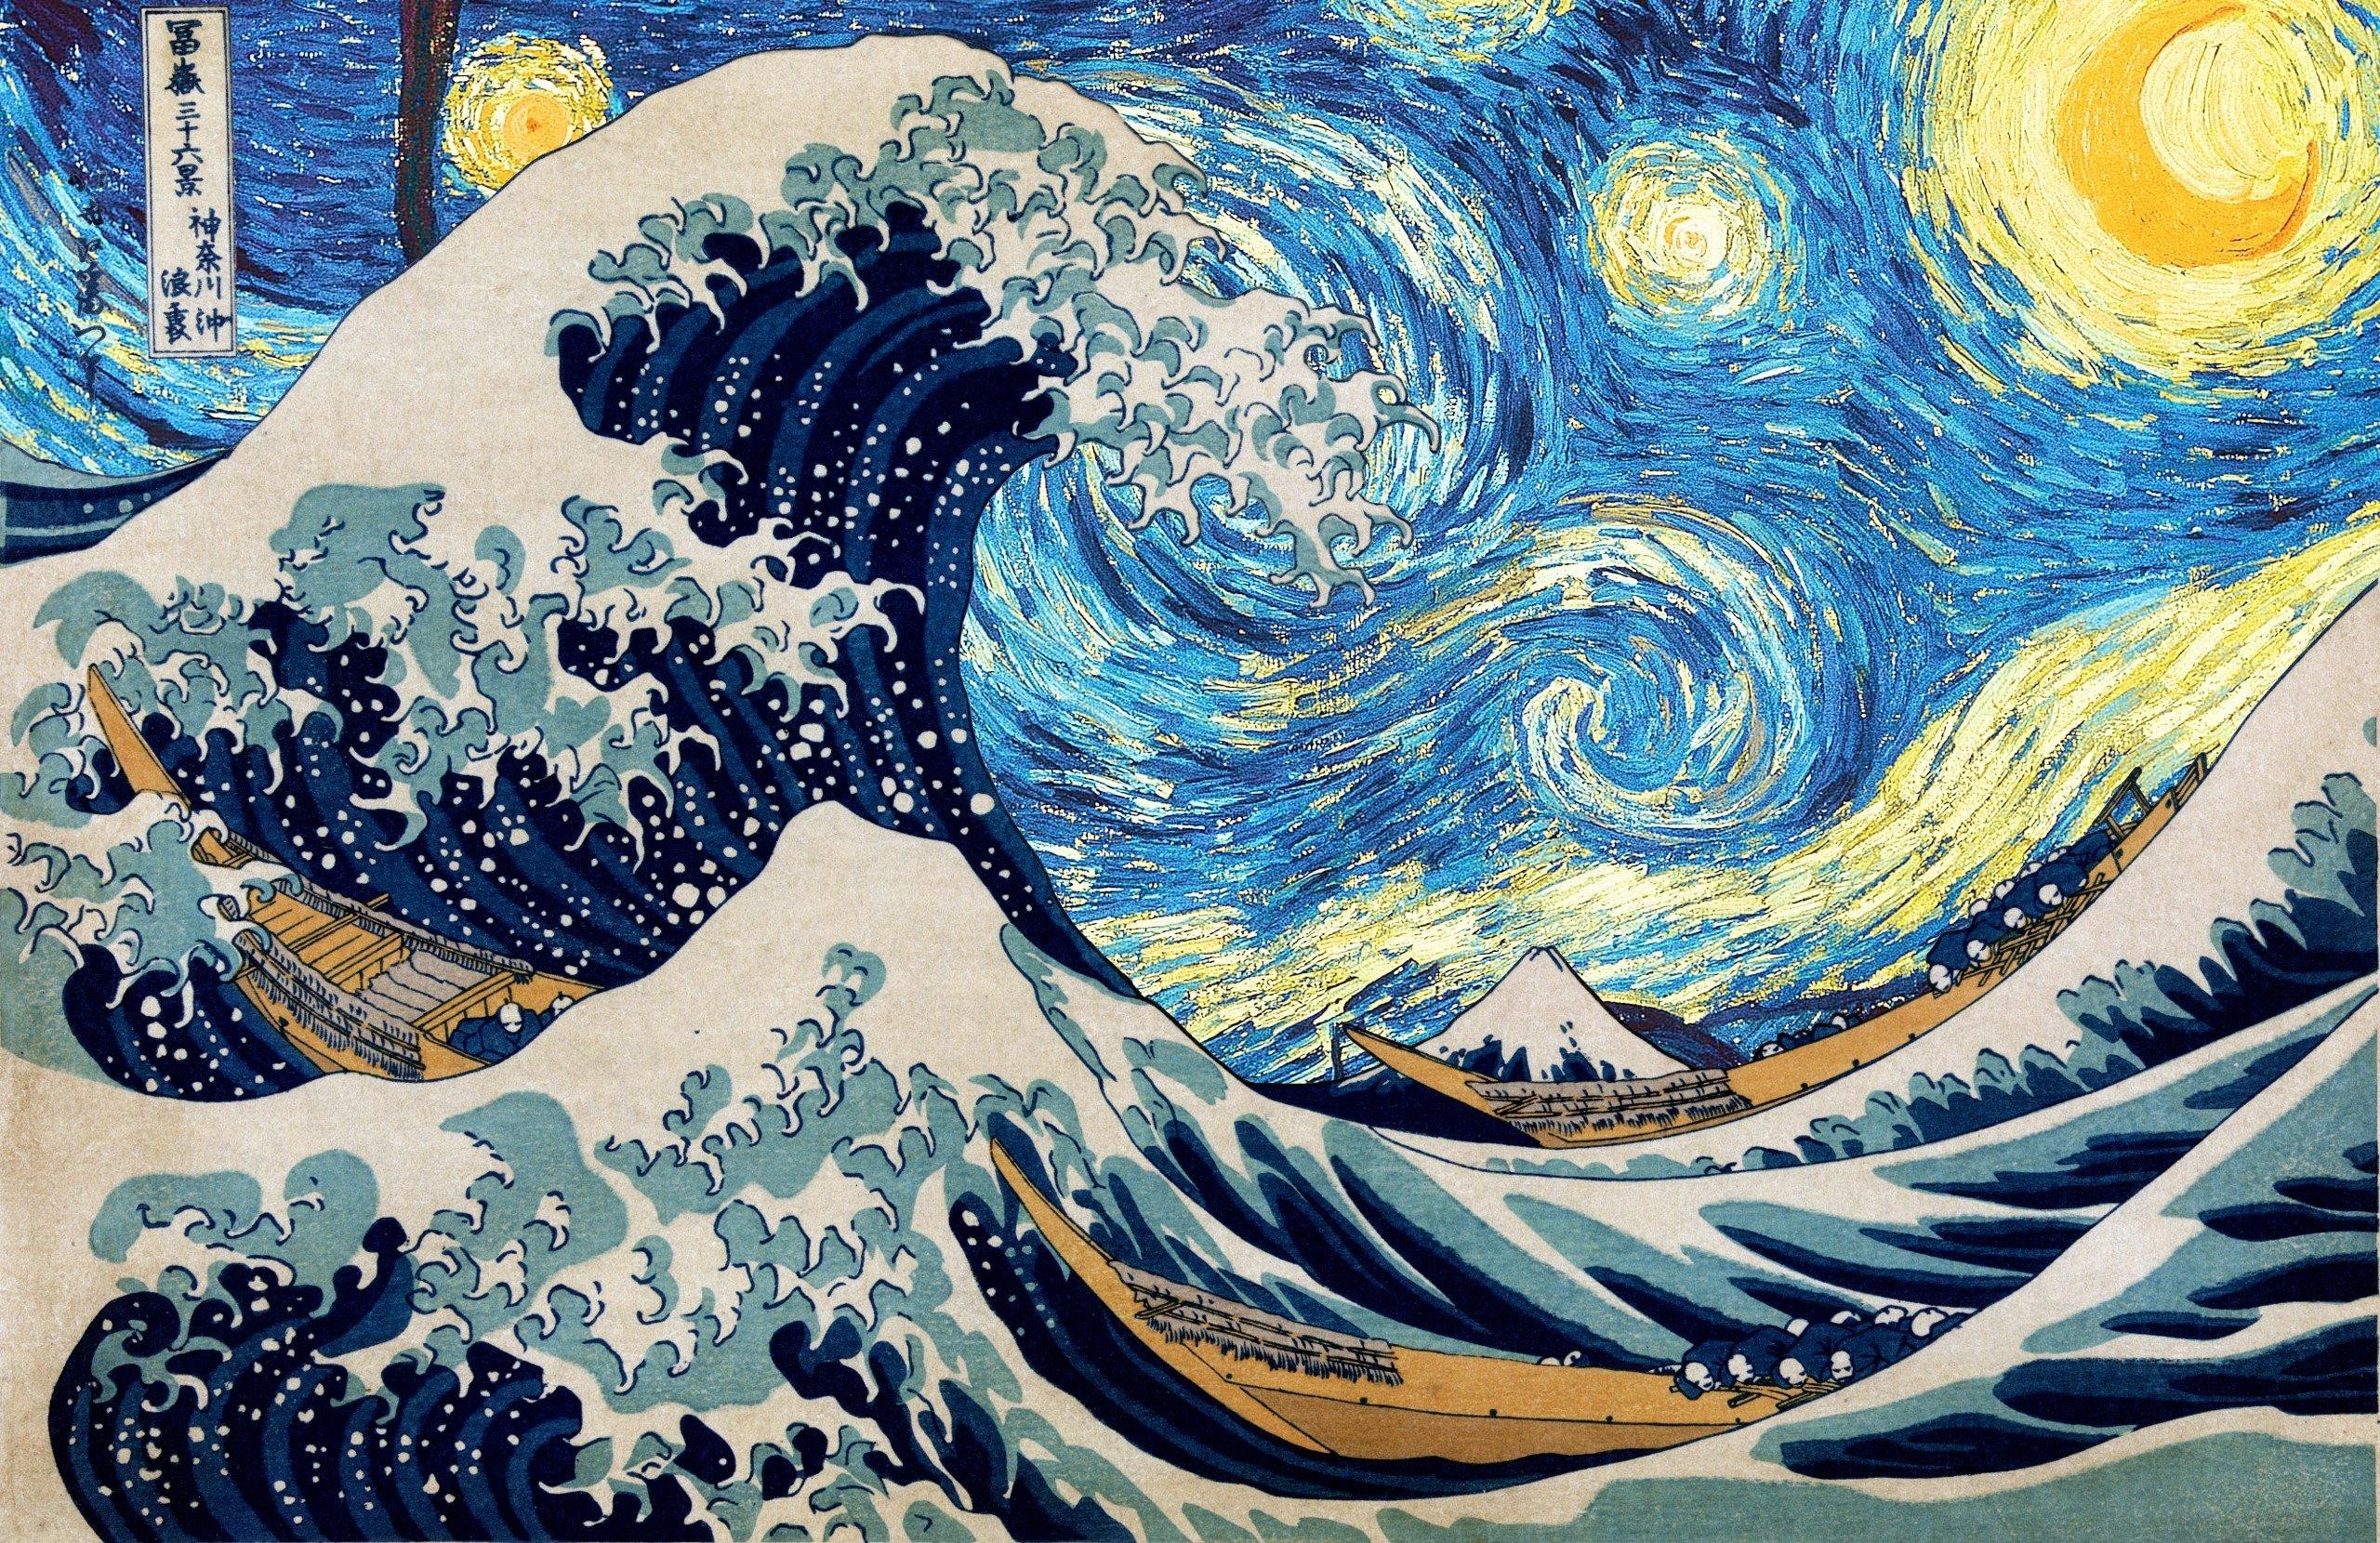 2560x1660 The great wave off kanagawa wallpaper free download jpg  Kanagawa  wallpaper japanese the wave desktop